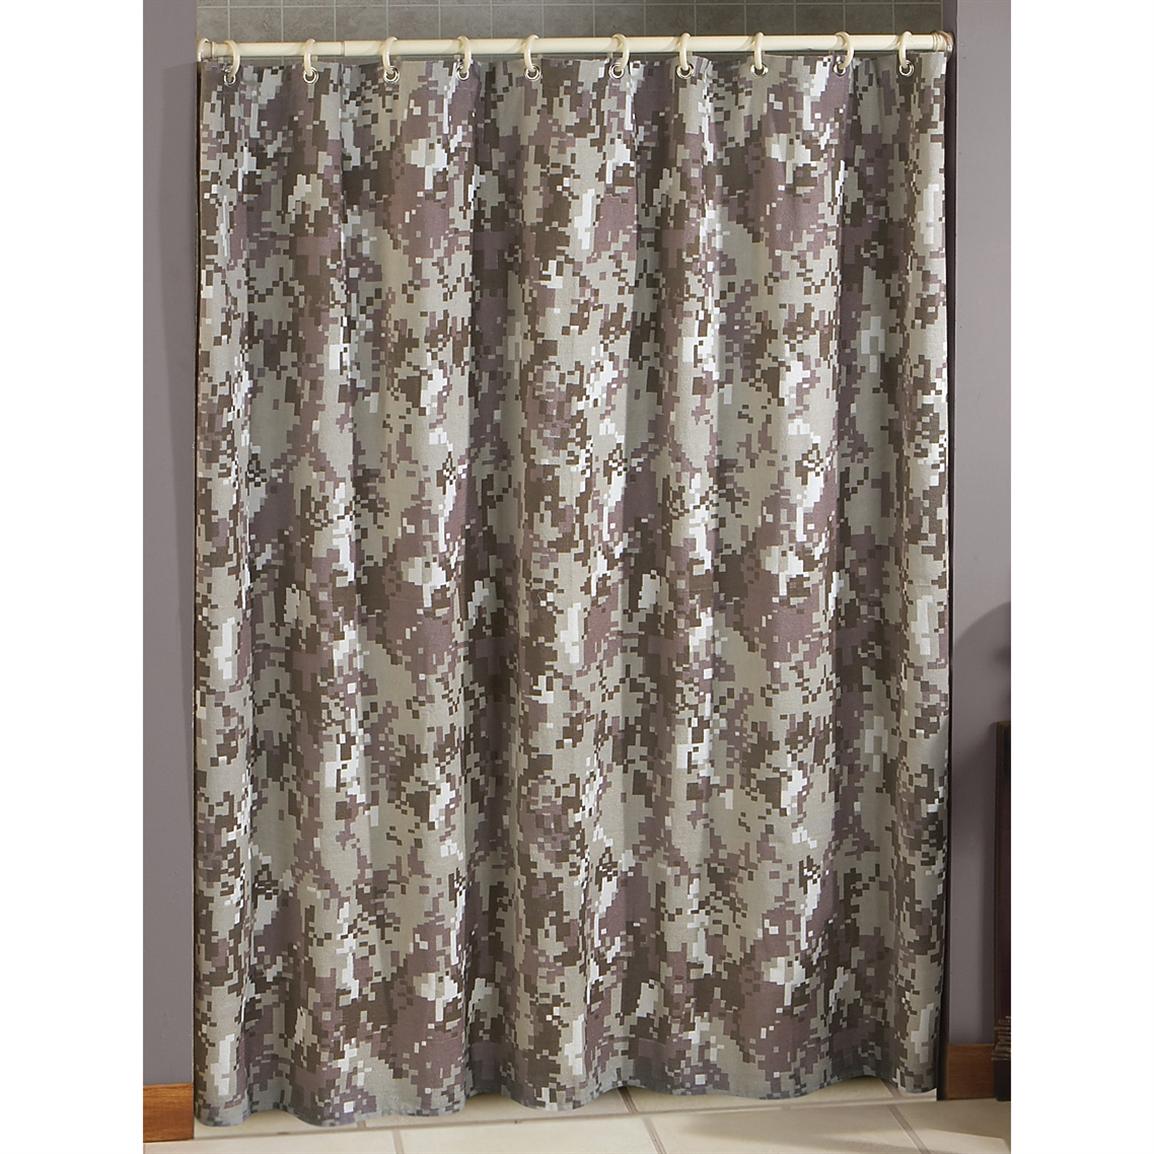 Standard Shower Curtain Length Beach Cloth Shower Curtain